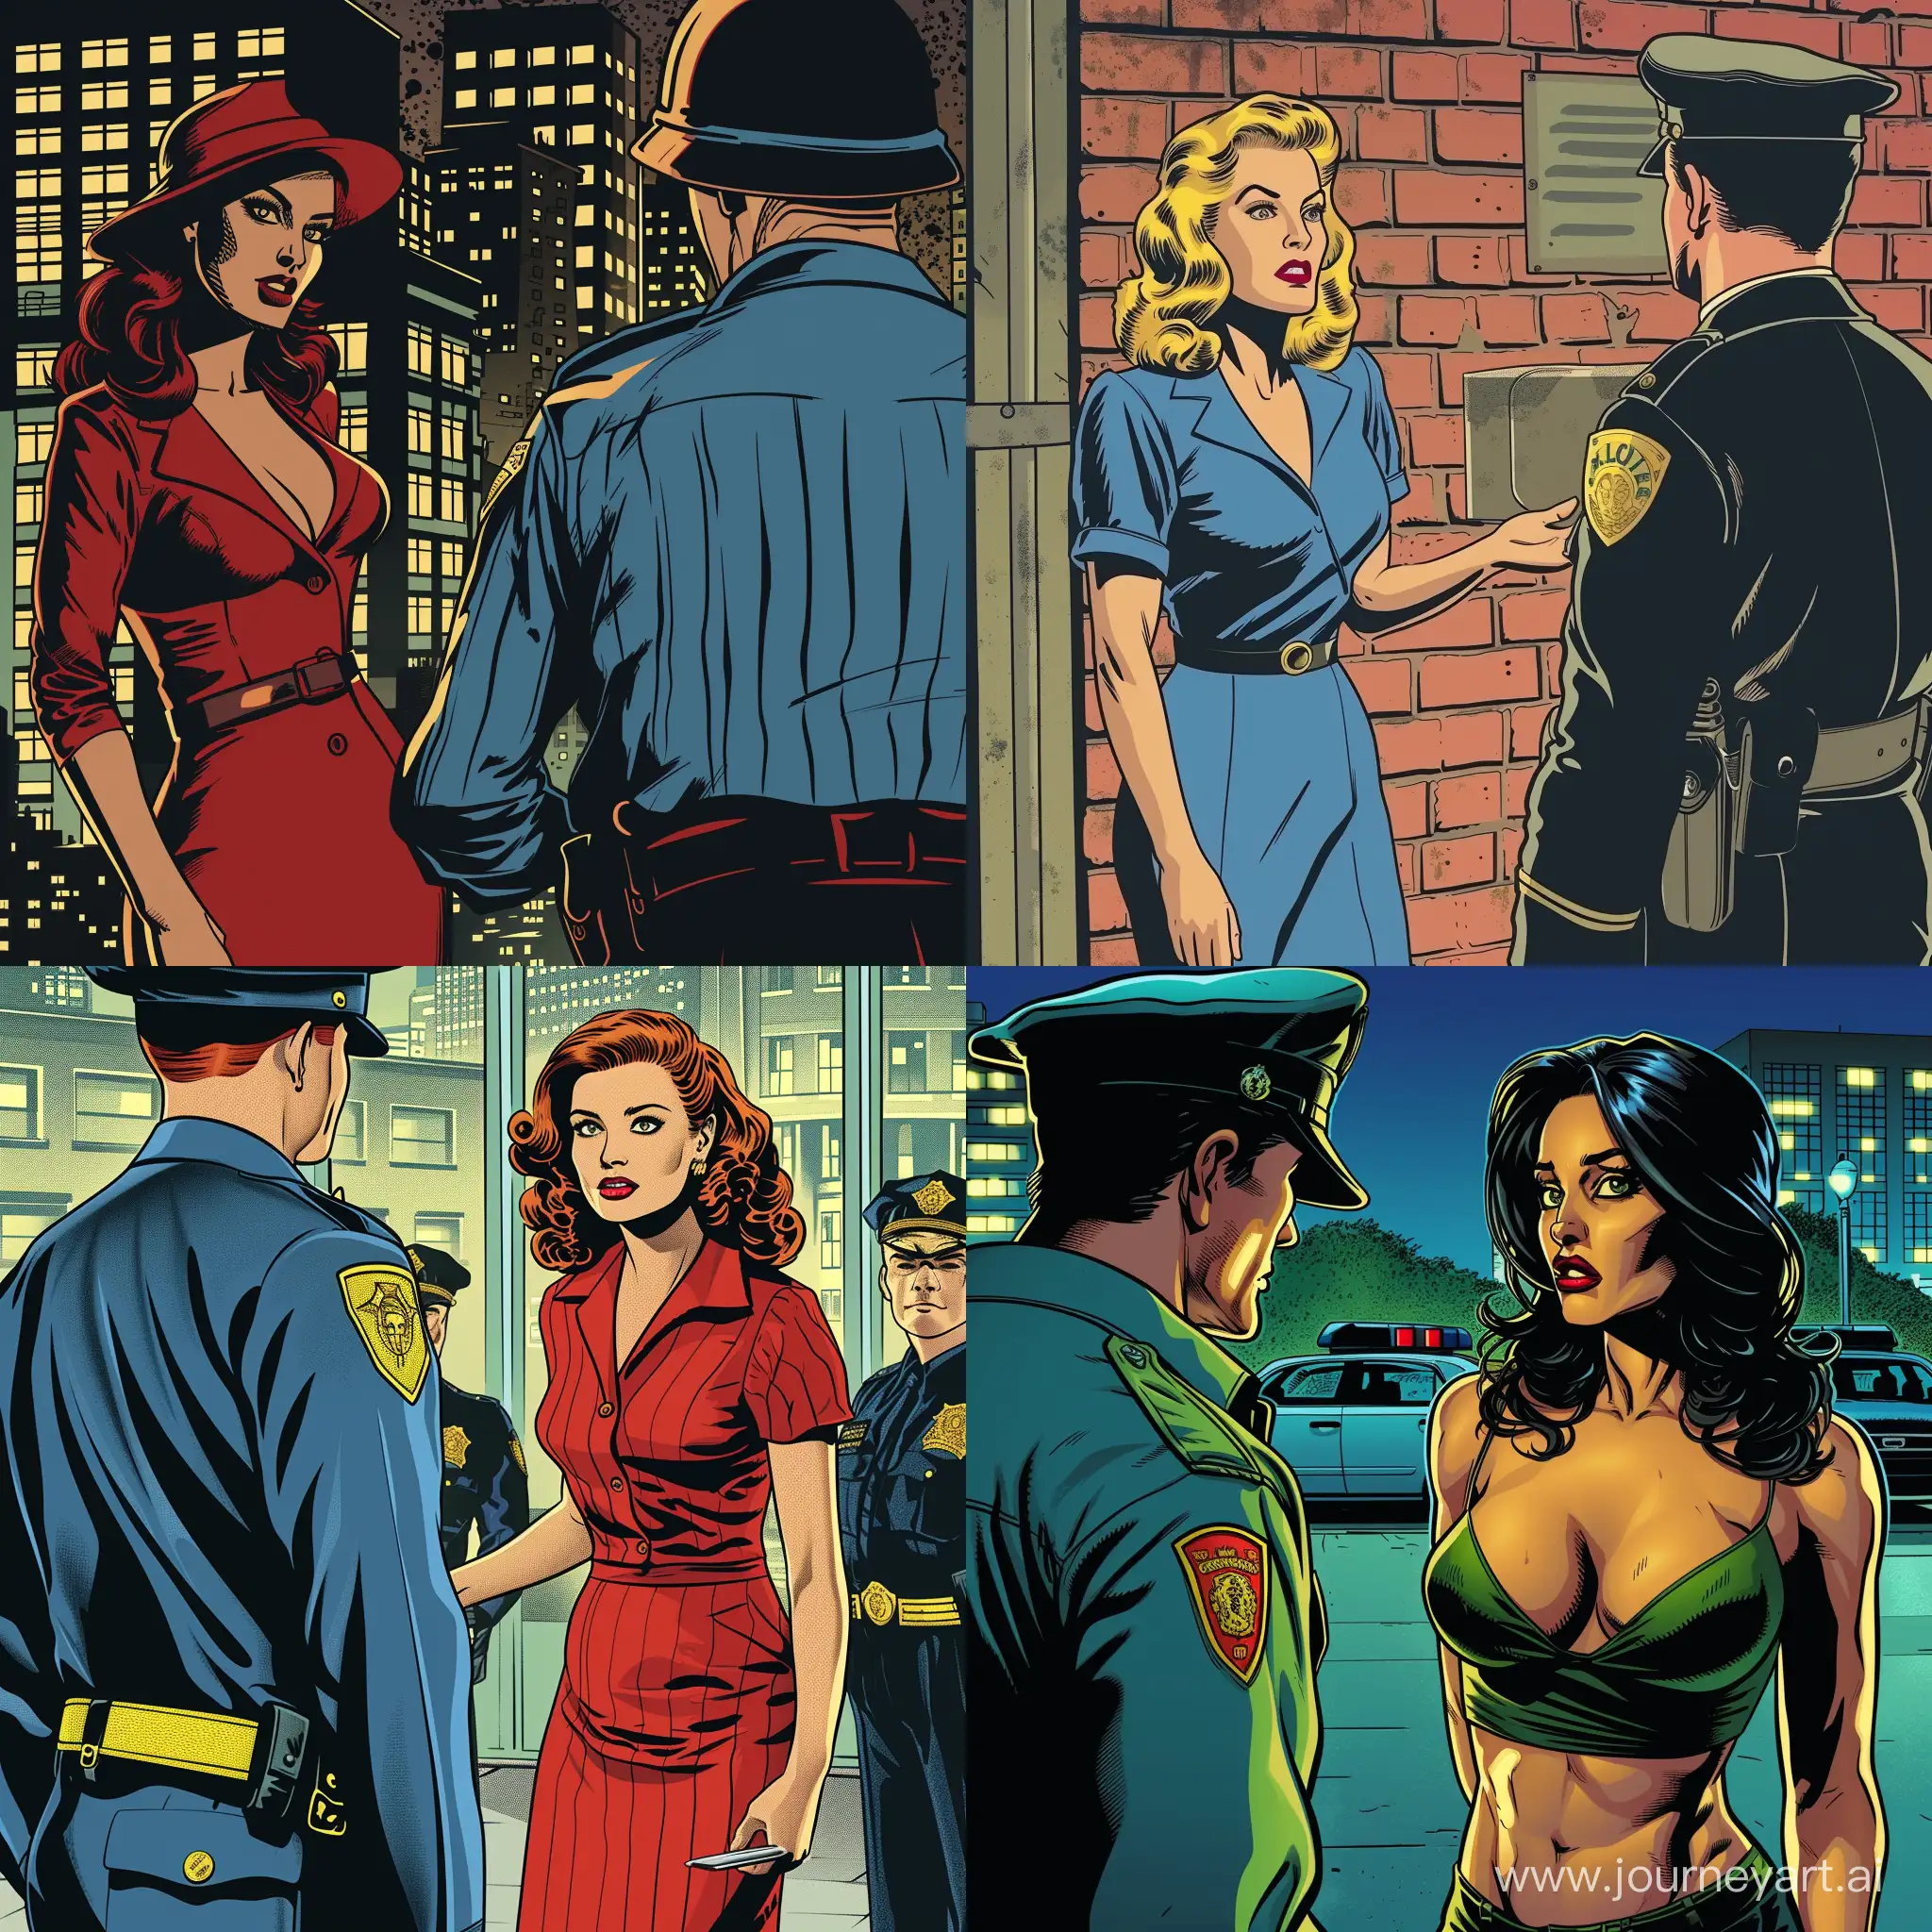 Deceptive-Criminal-Confrontation-American-Modern-Comic-Style